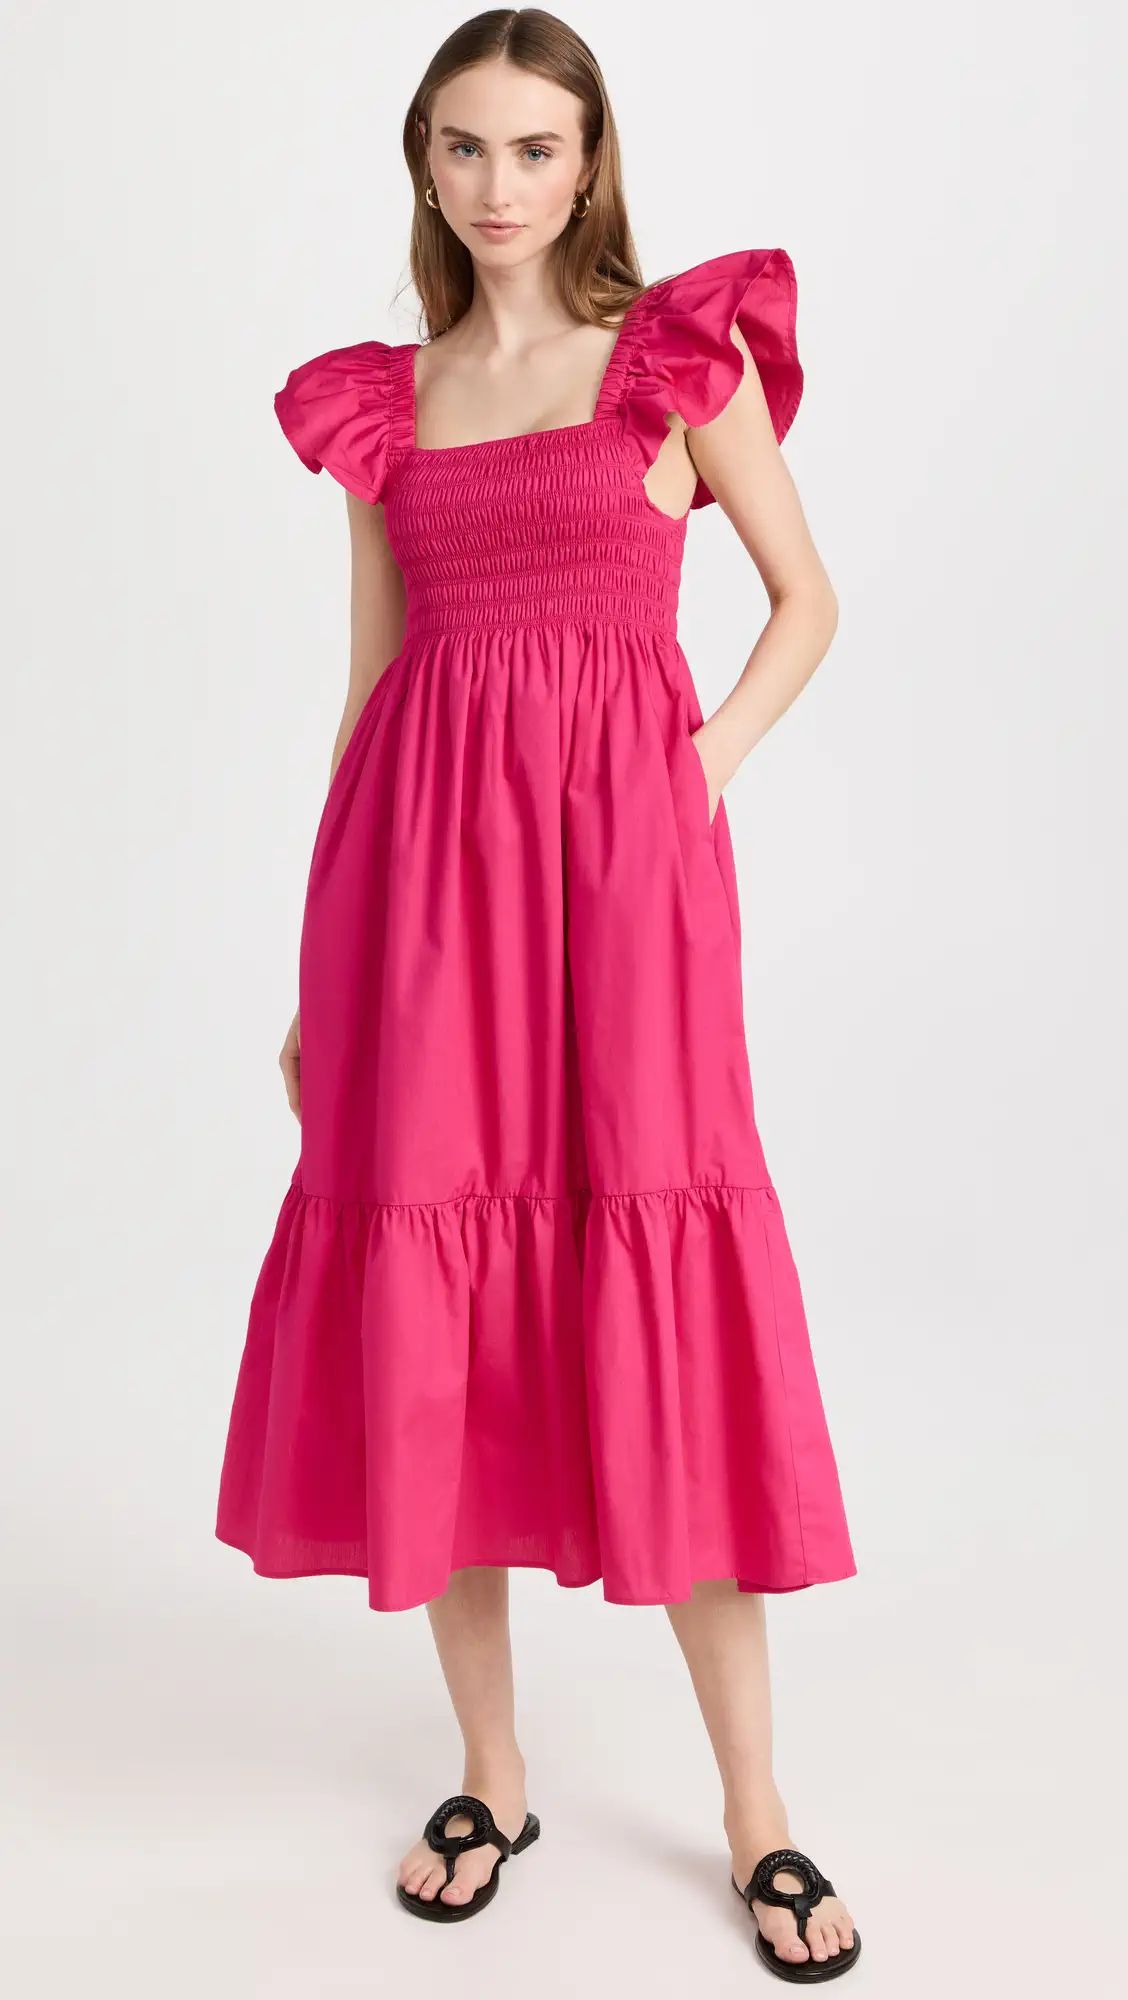 o.p.t Tuscany Dress | Shopbop | Shopbop